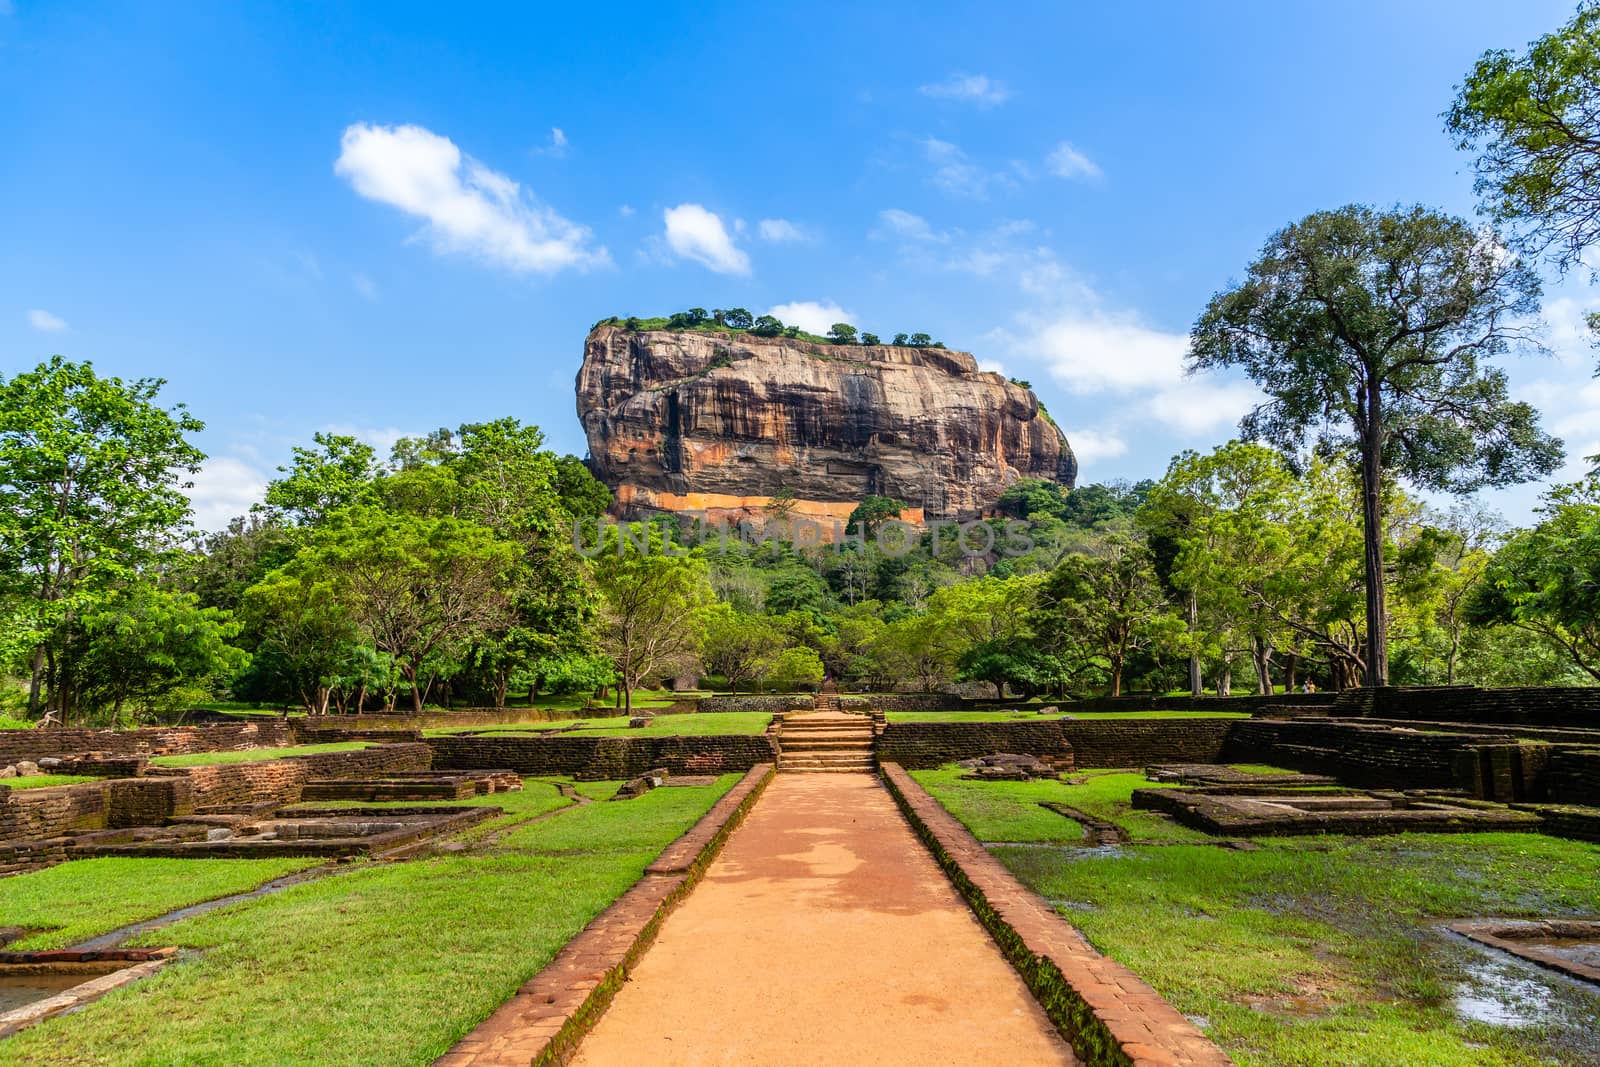 Sigiriya or Lion rock - ancient rock fortress, Dambulla, Central Province ,Sri Lanka